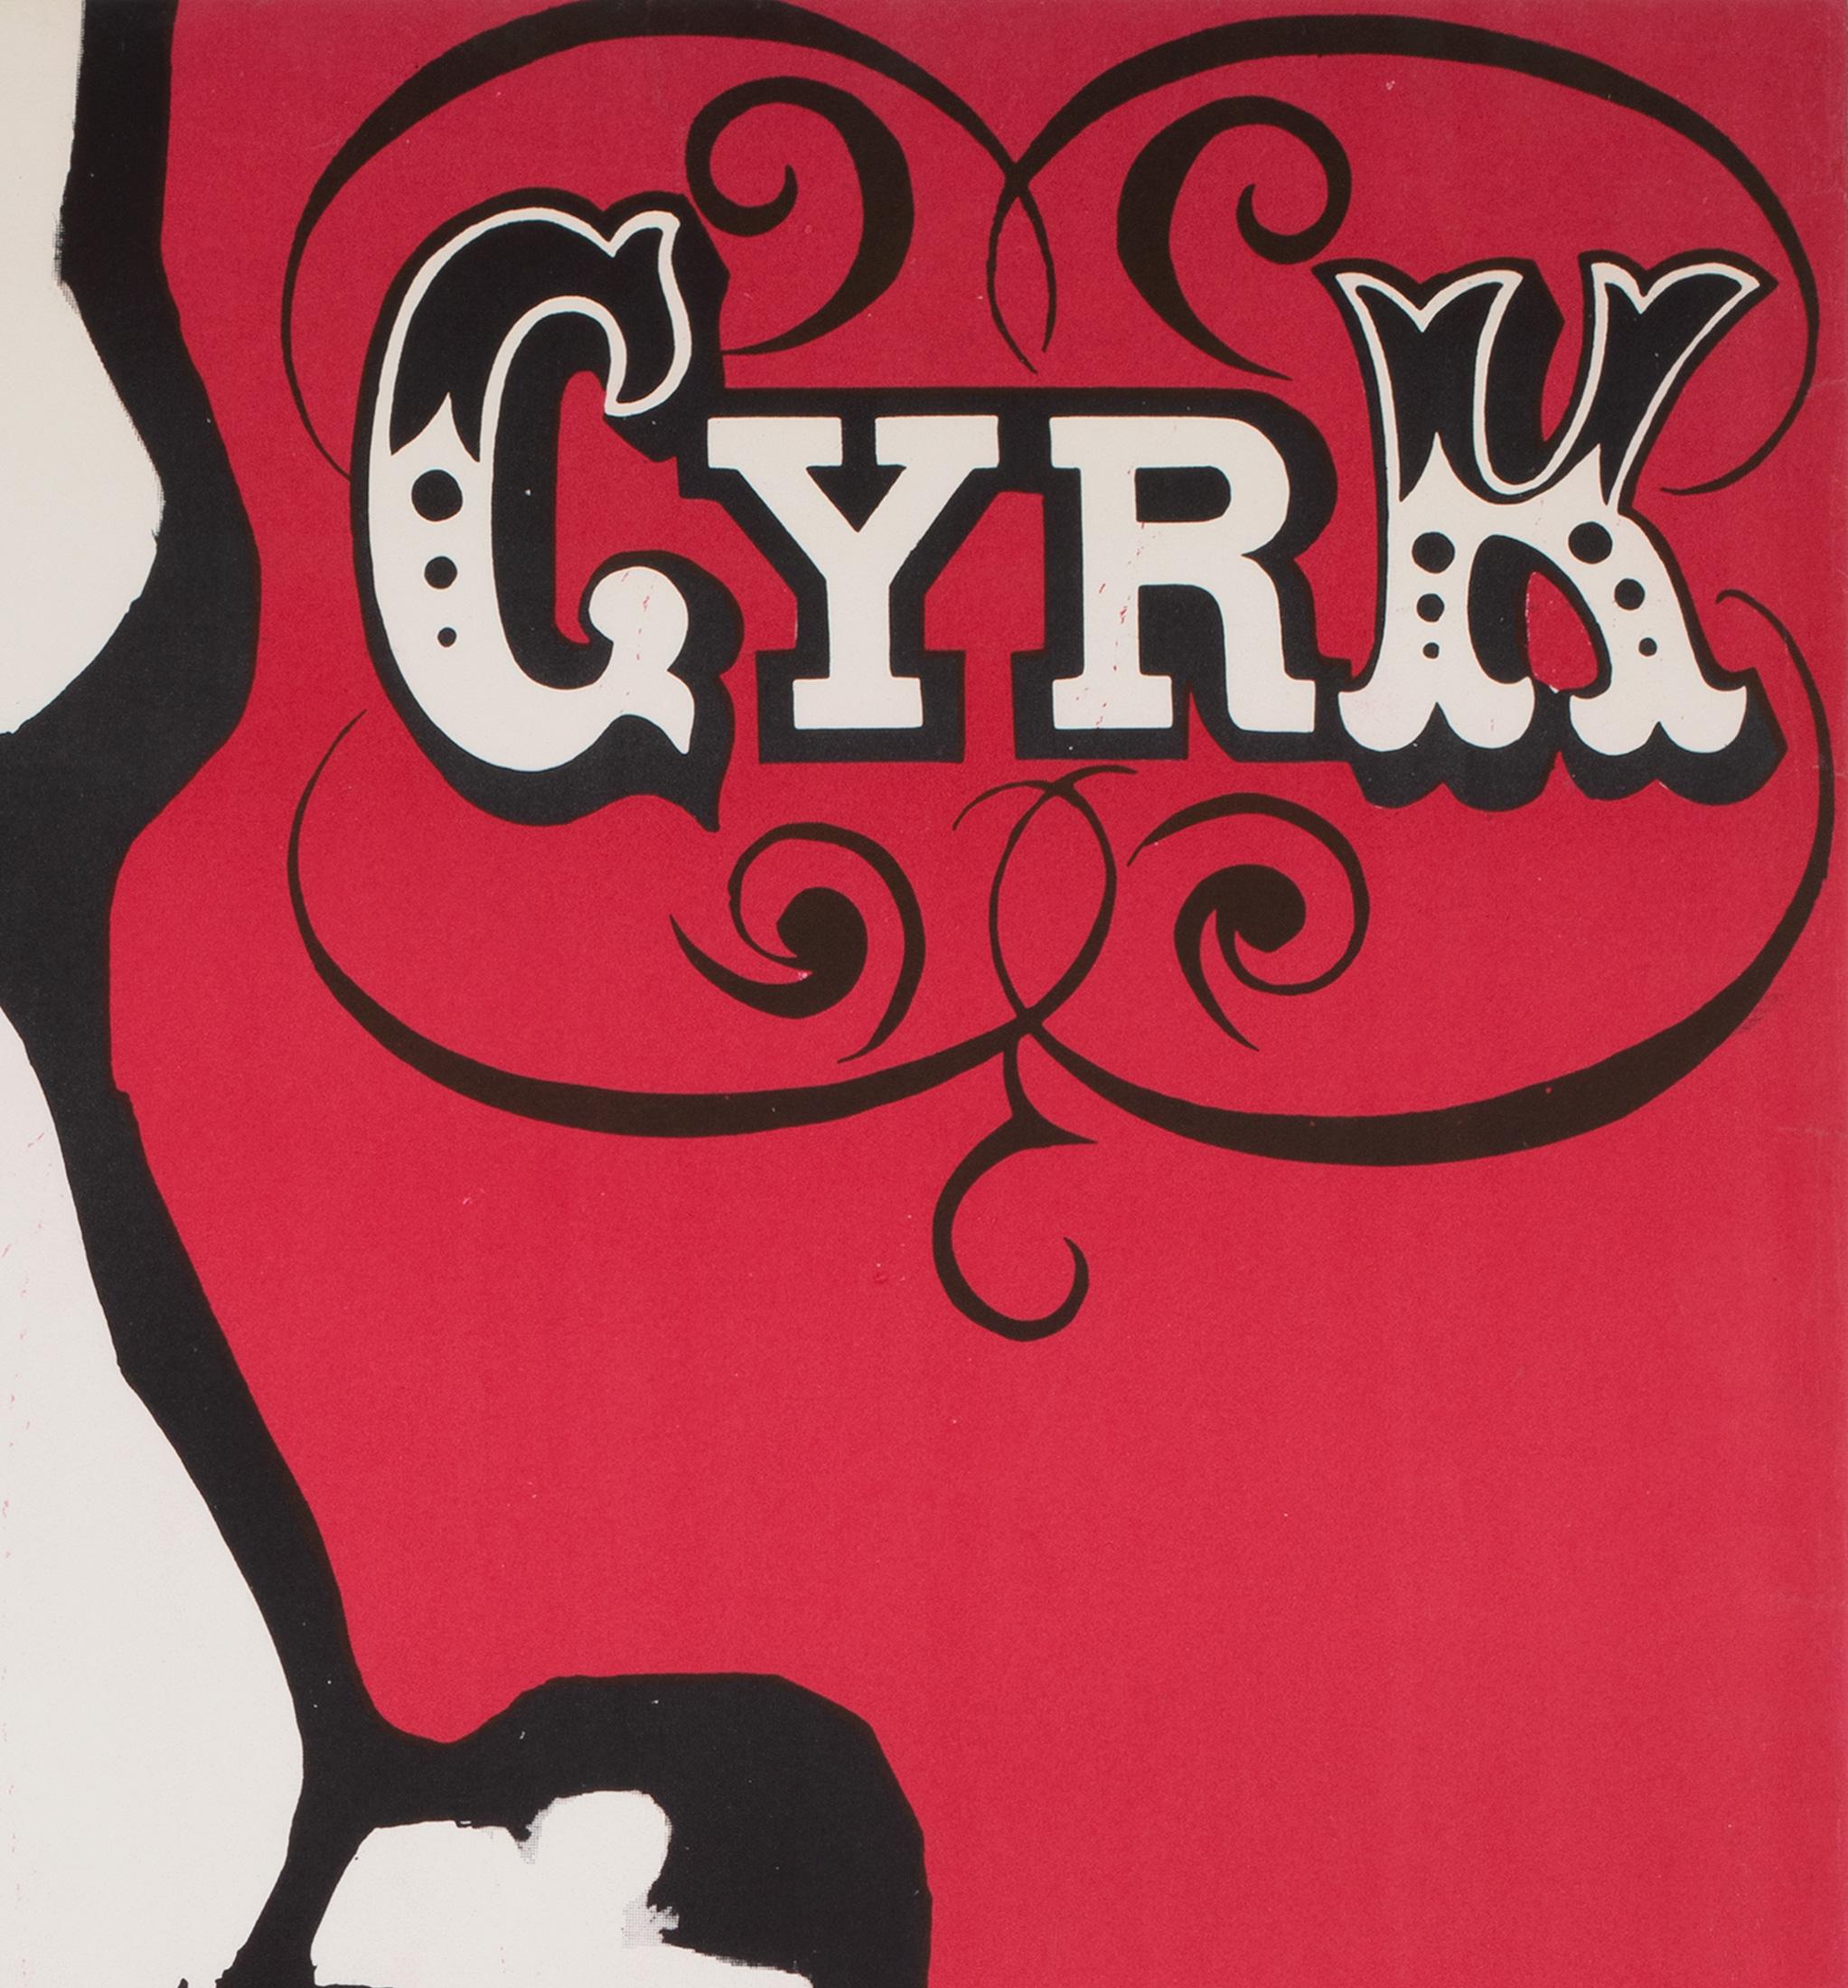 Cyrk Three Acrobats 1964 Polish Circus Poster, Gorka For Sale 1